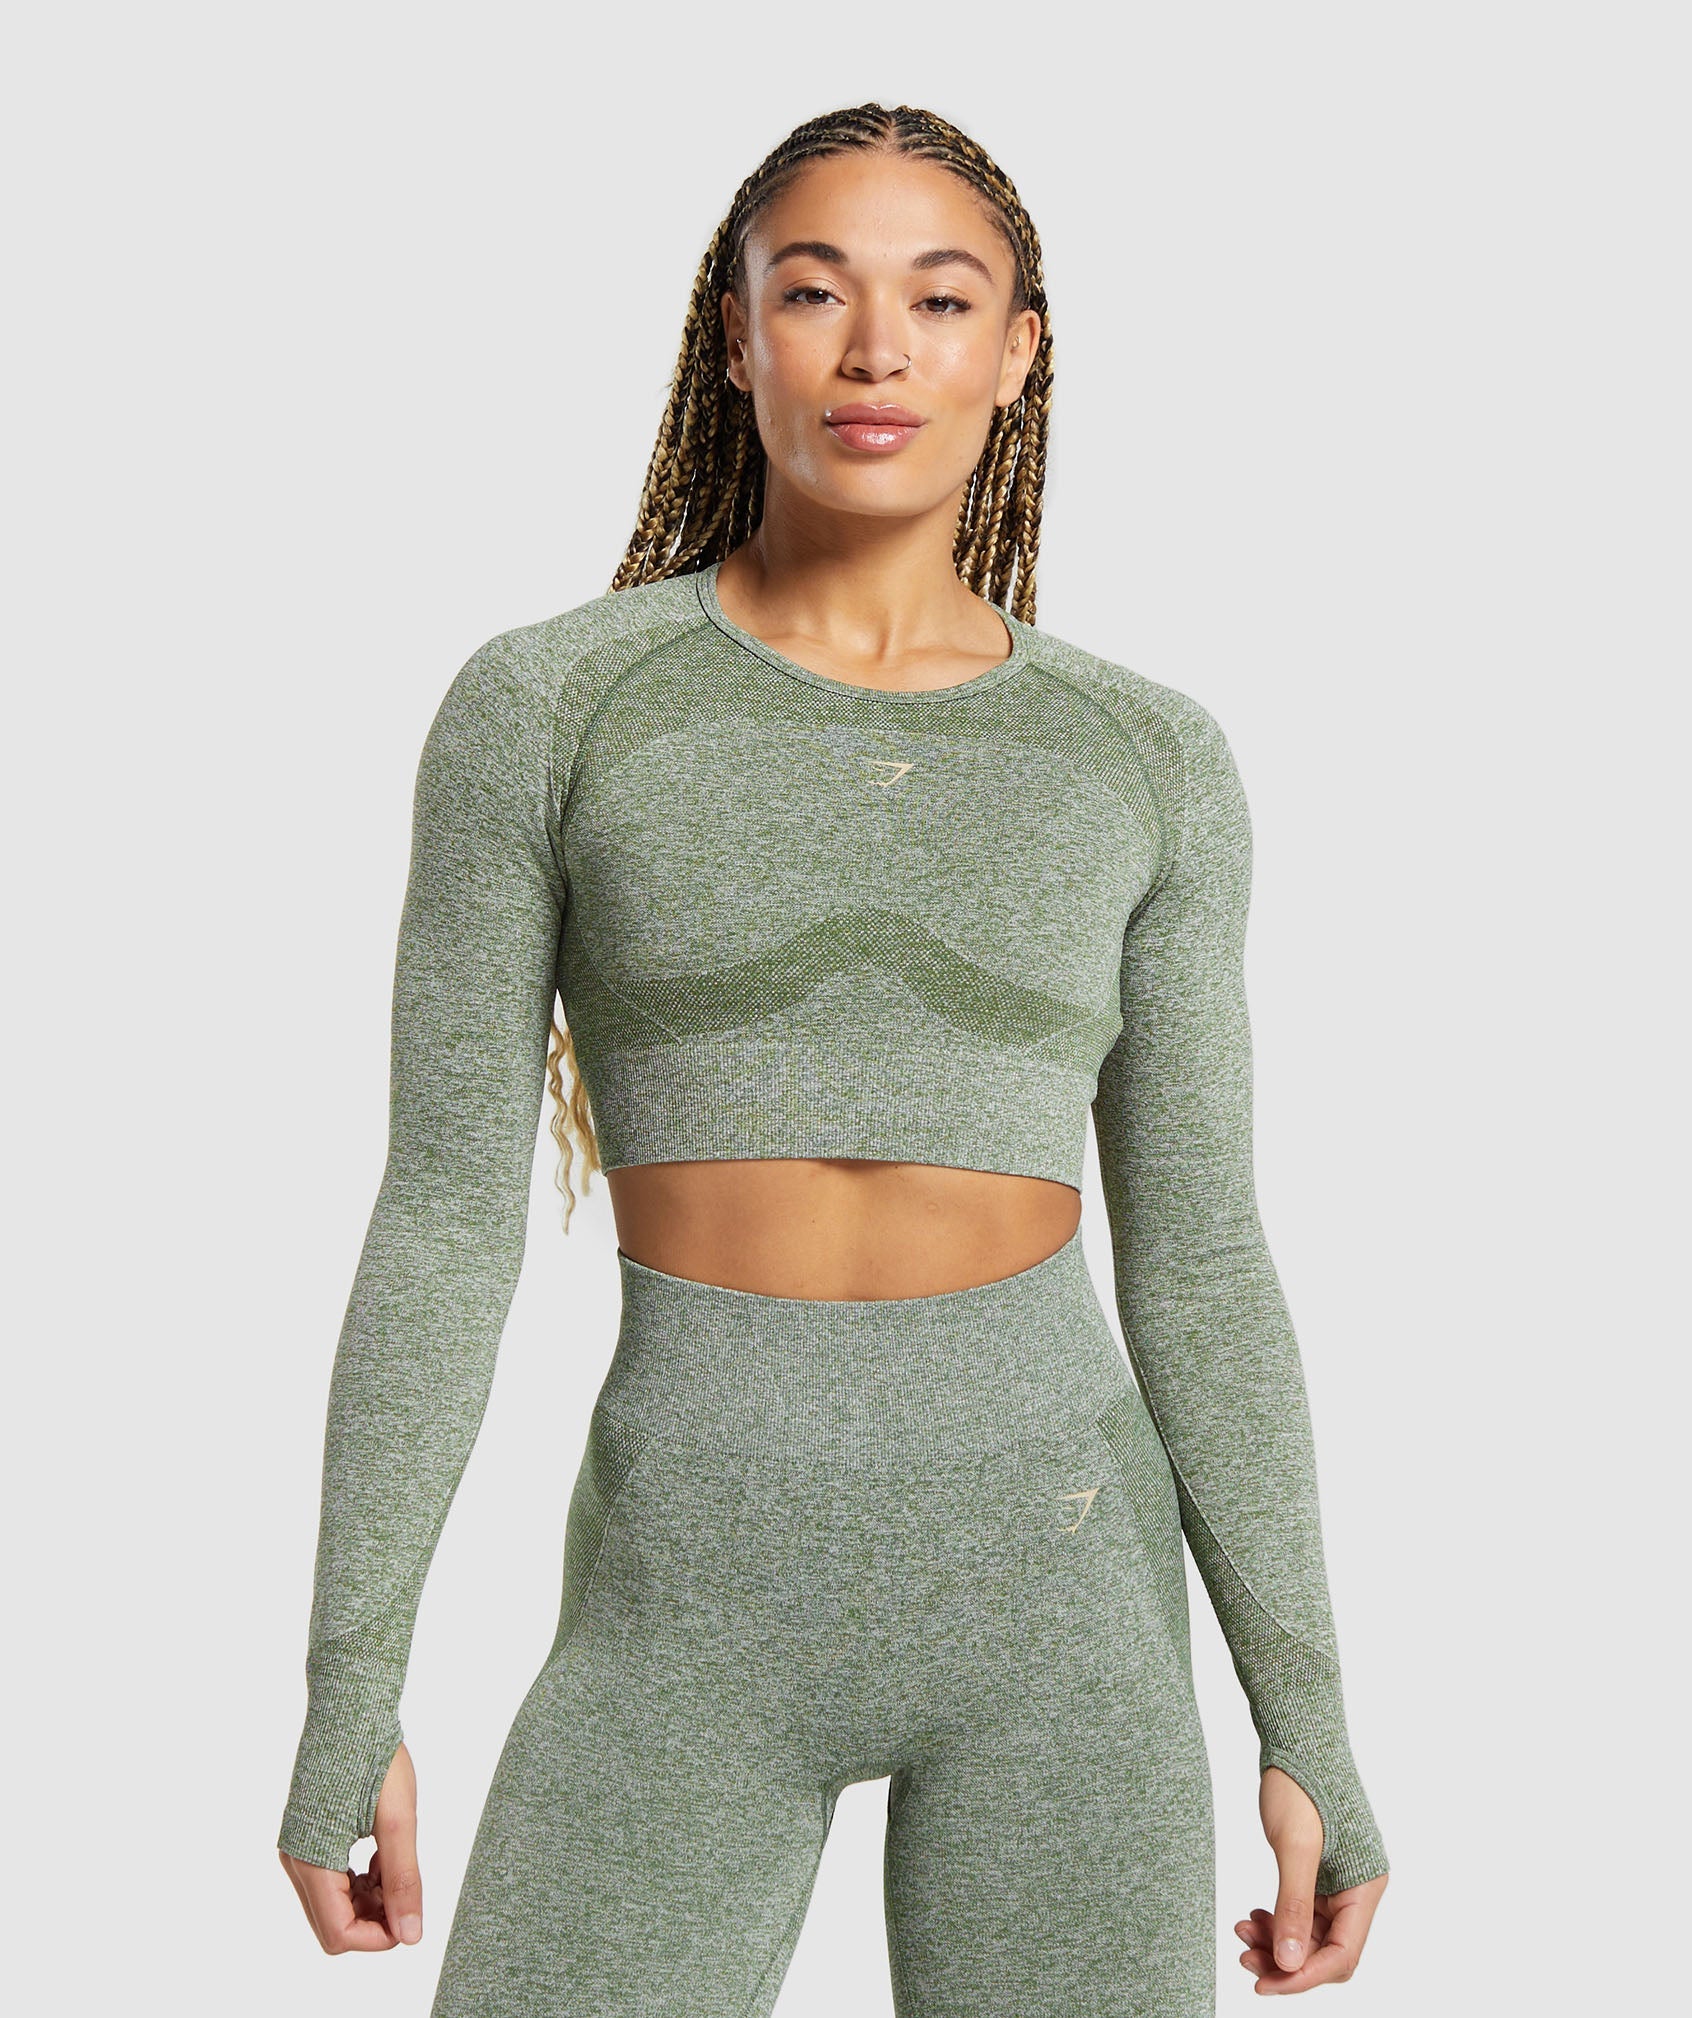 Flex Sports Long Sleeve Crop Top in Force Green/Vanilla Beige